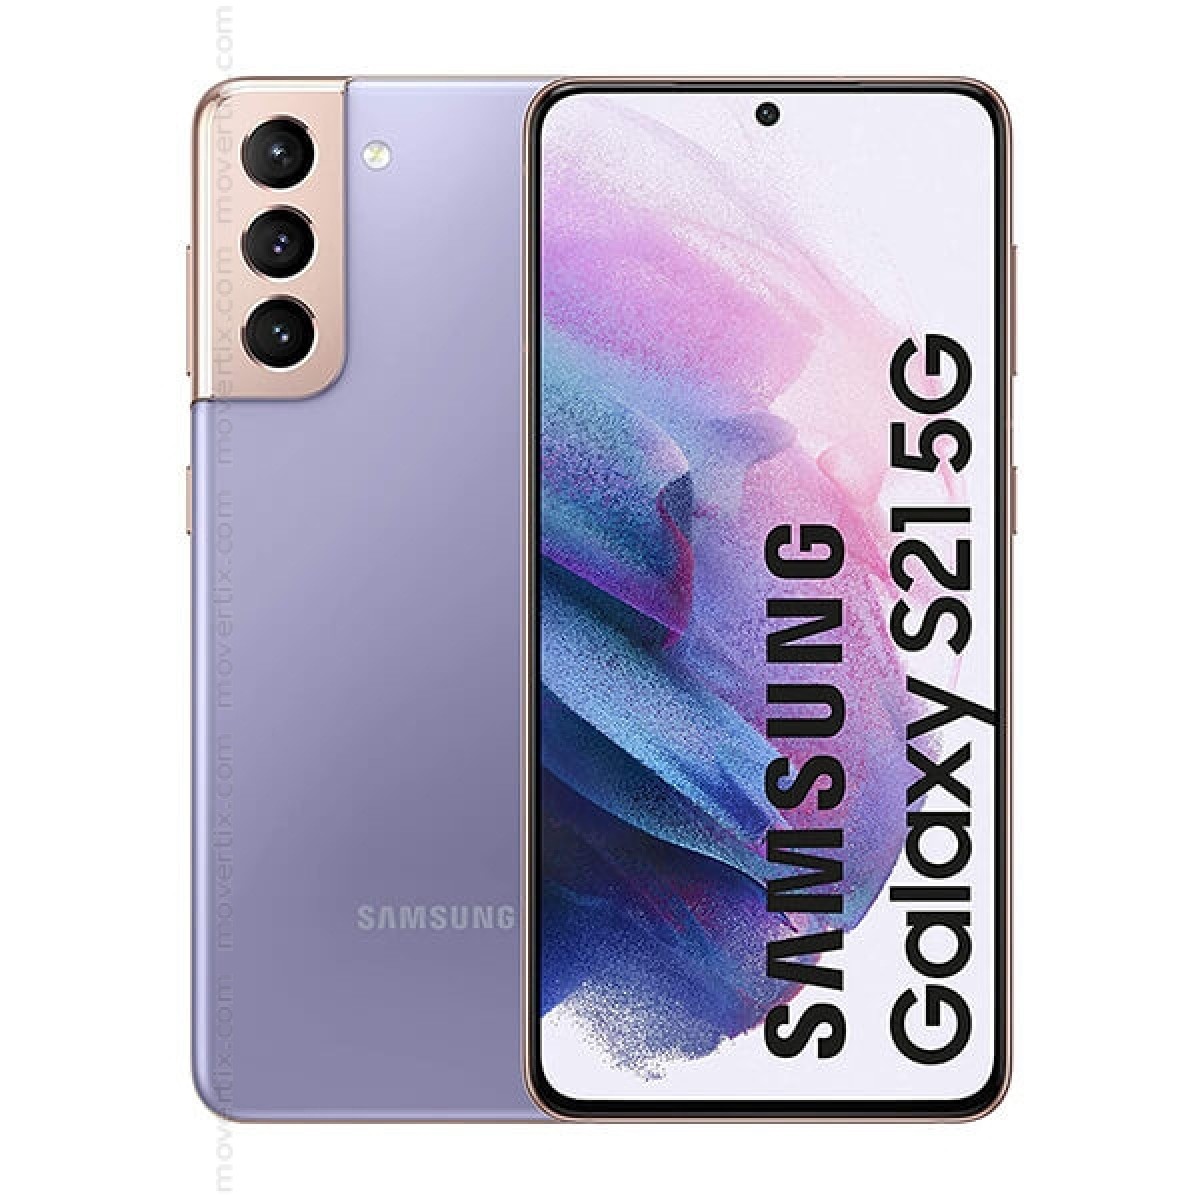 Samsung Galaxy S21 5g Phantom Violet 256gb And 8gb Ram Sm G991b Movertix Mobile Phones Shop